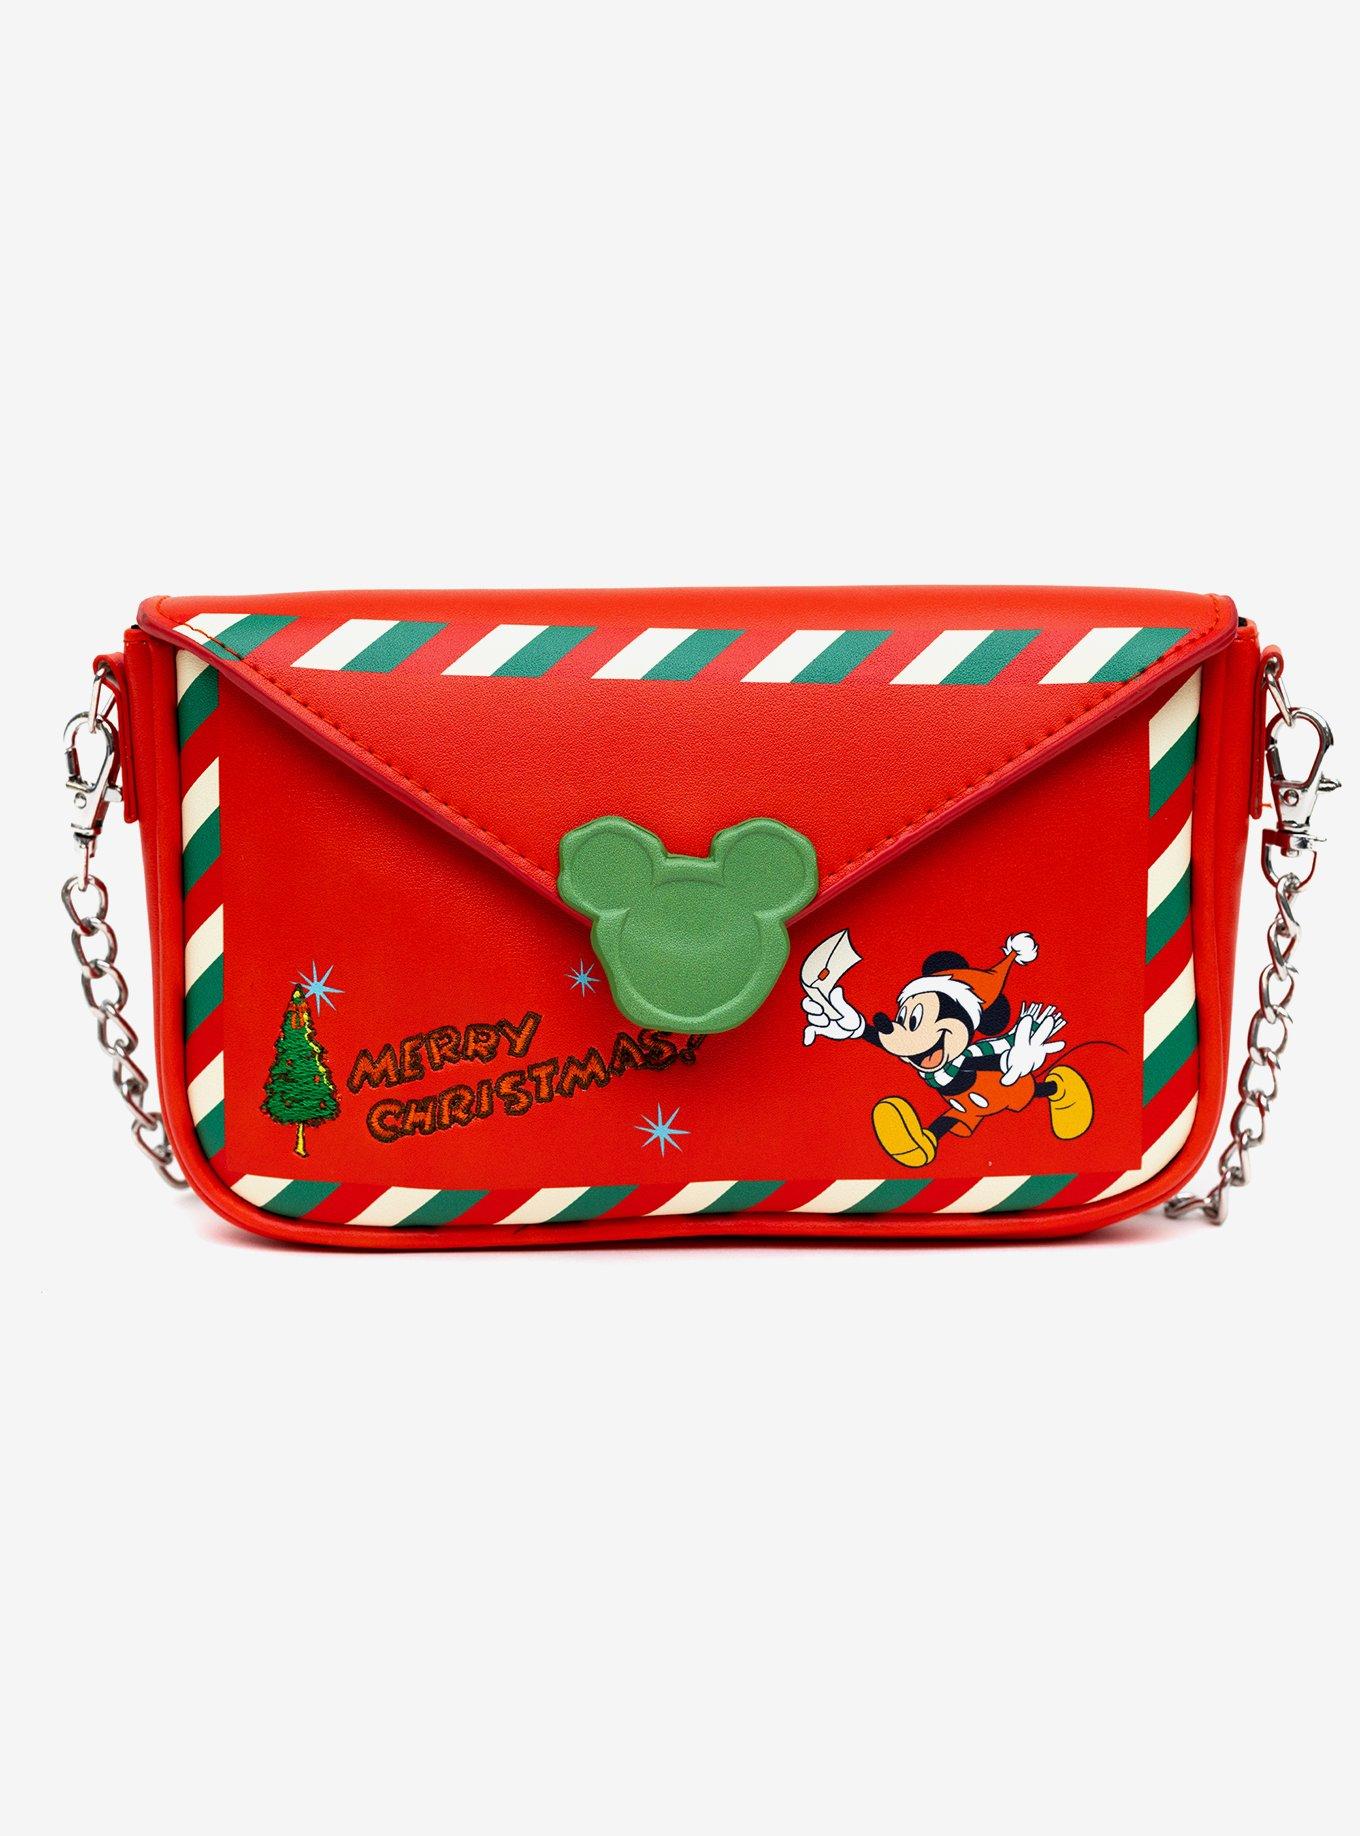 Disney, Bags, Disneysmickey Mouse Veganfaux Leather Large Wallet Wristlet